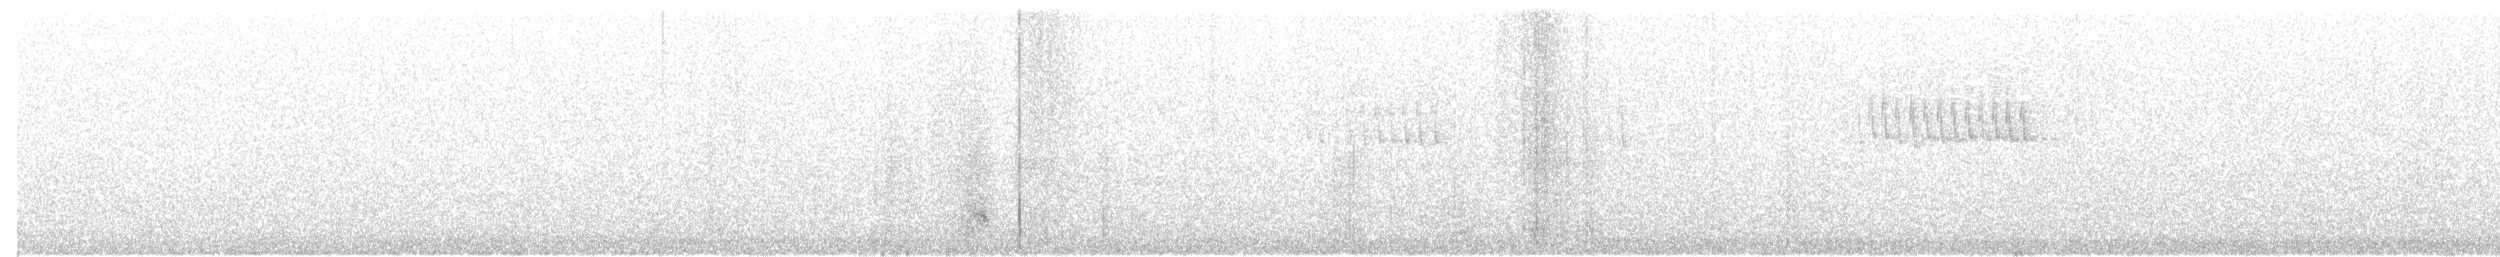 Paruline vermivore - ML167732381